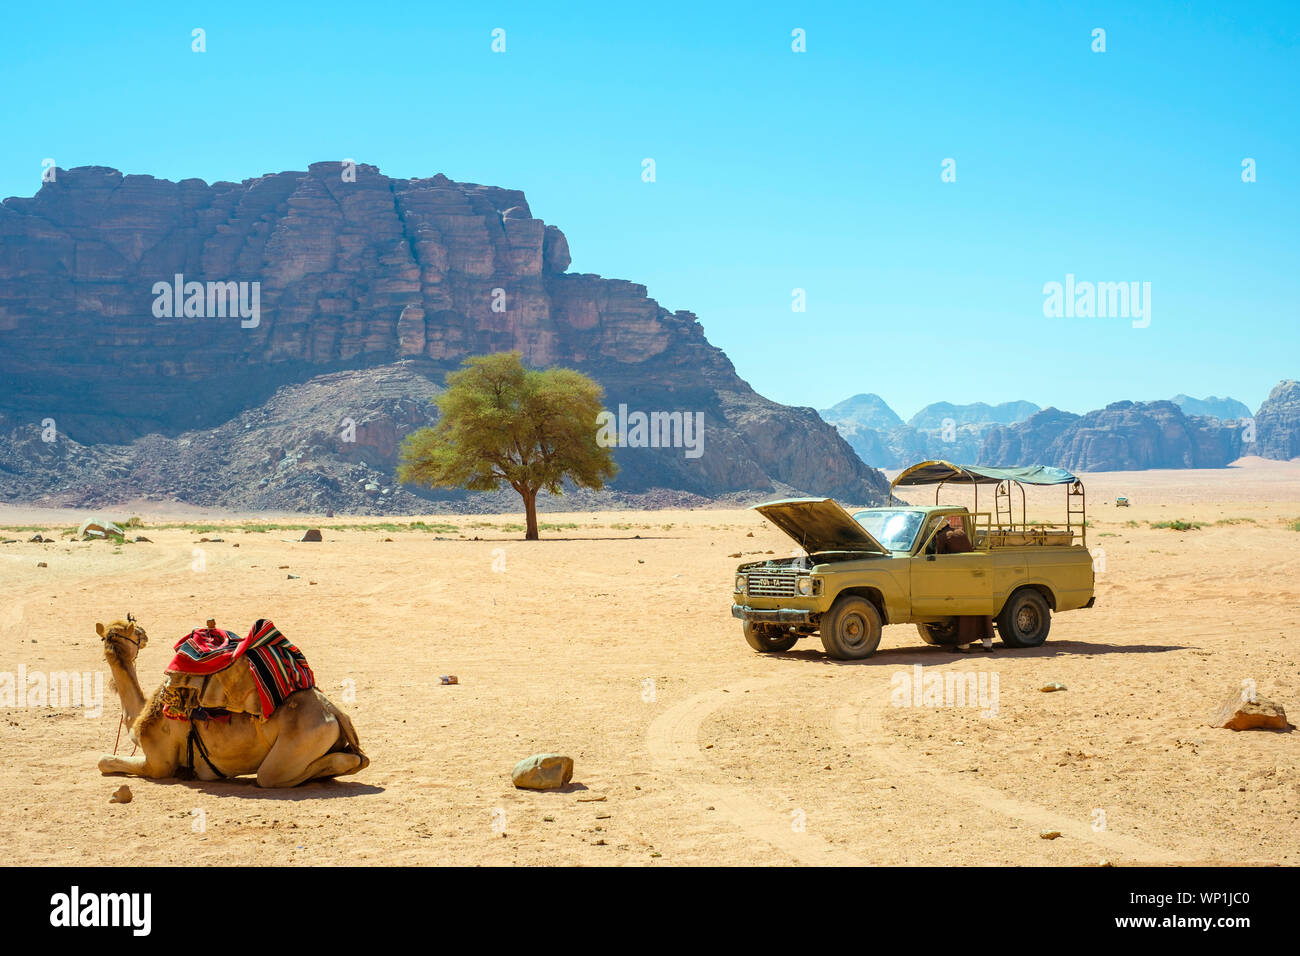 Jordan, Aqaba Governorate, Wadi Rum. Wadi Rum Protected Area, UNESCO World Heritage Site. Four wheel drive truck belonging to local bedouin guide. Stock Photo